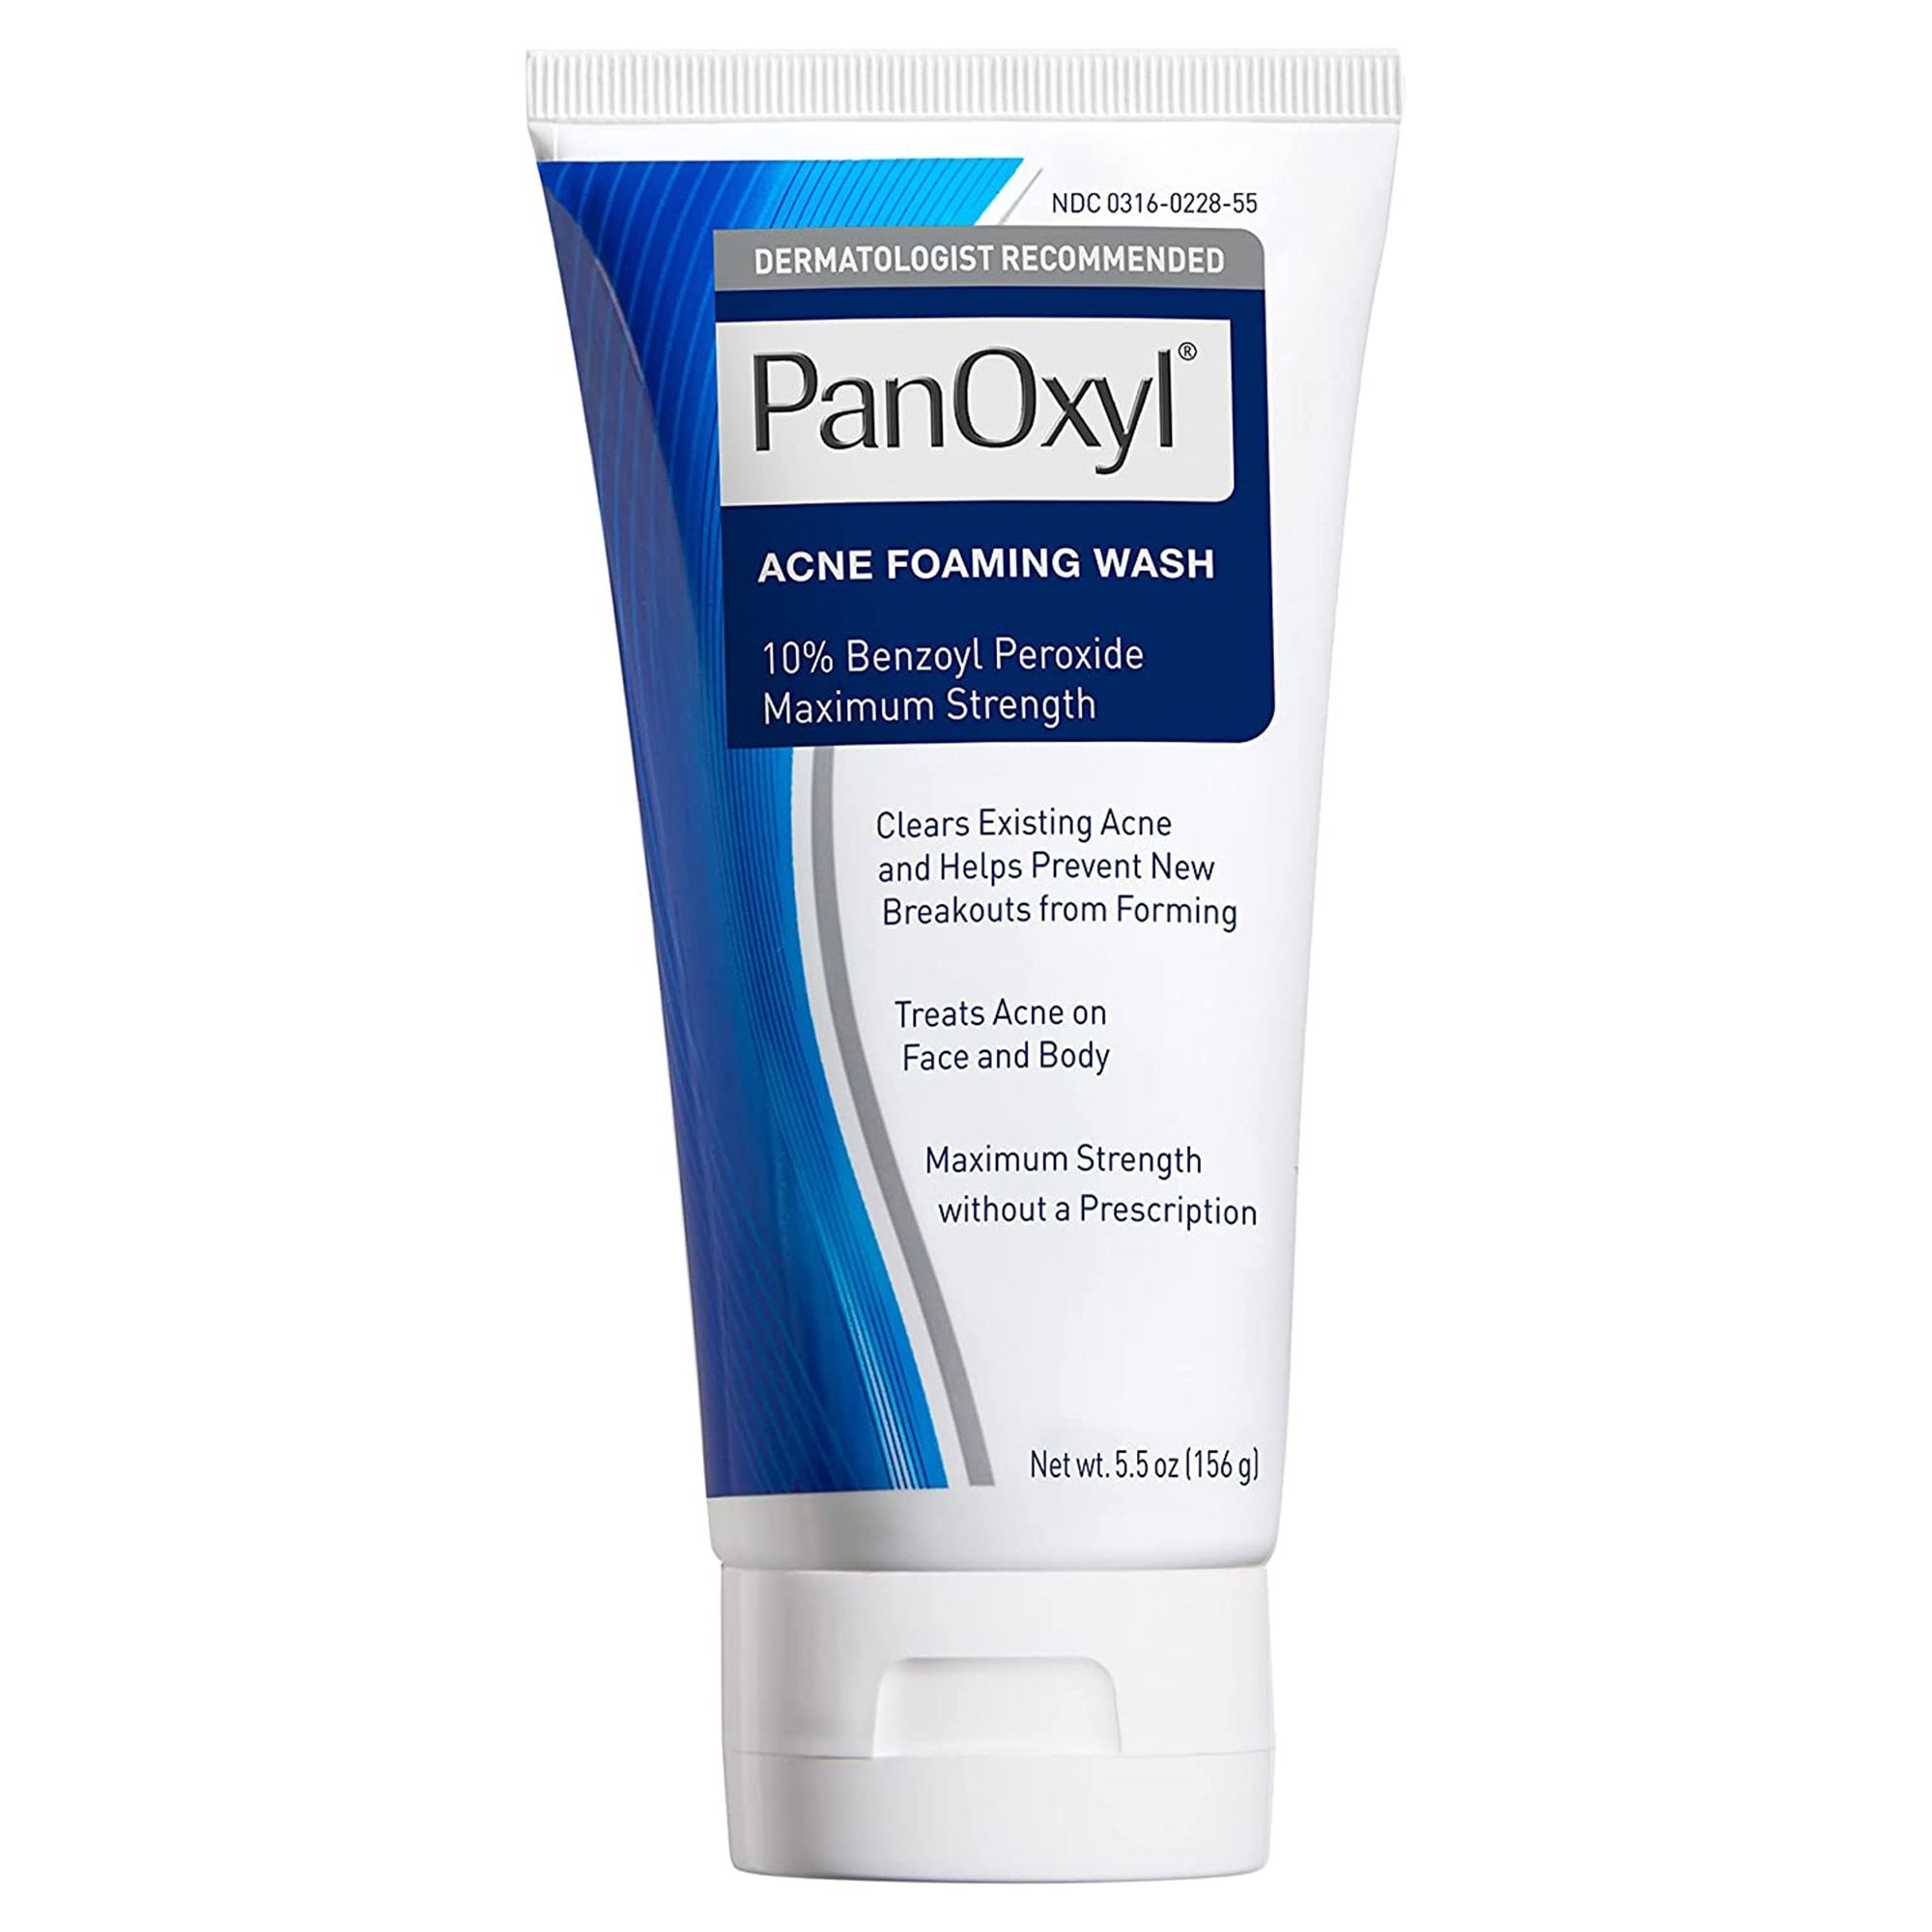 PanOxyl Acne Foaming Wash Benzoyl Peroxide 10% Maximum Strength - 5.5 oz